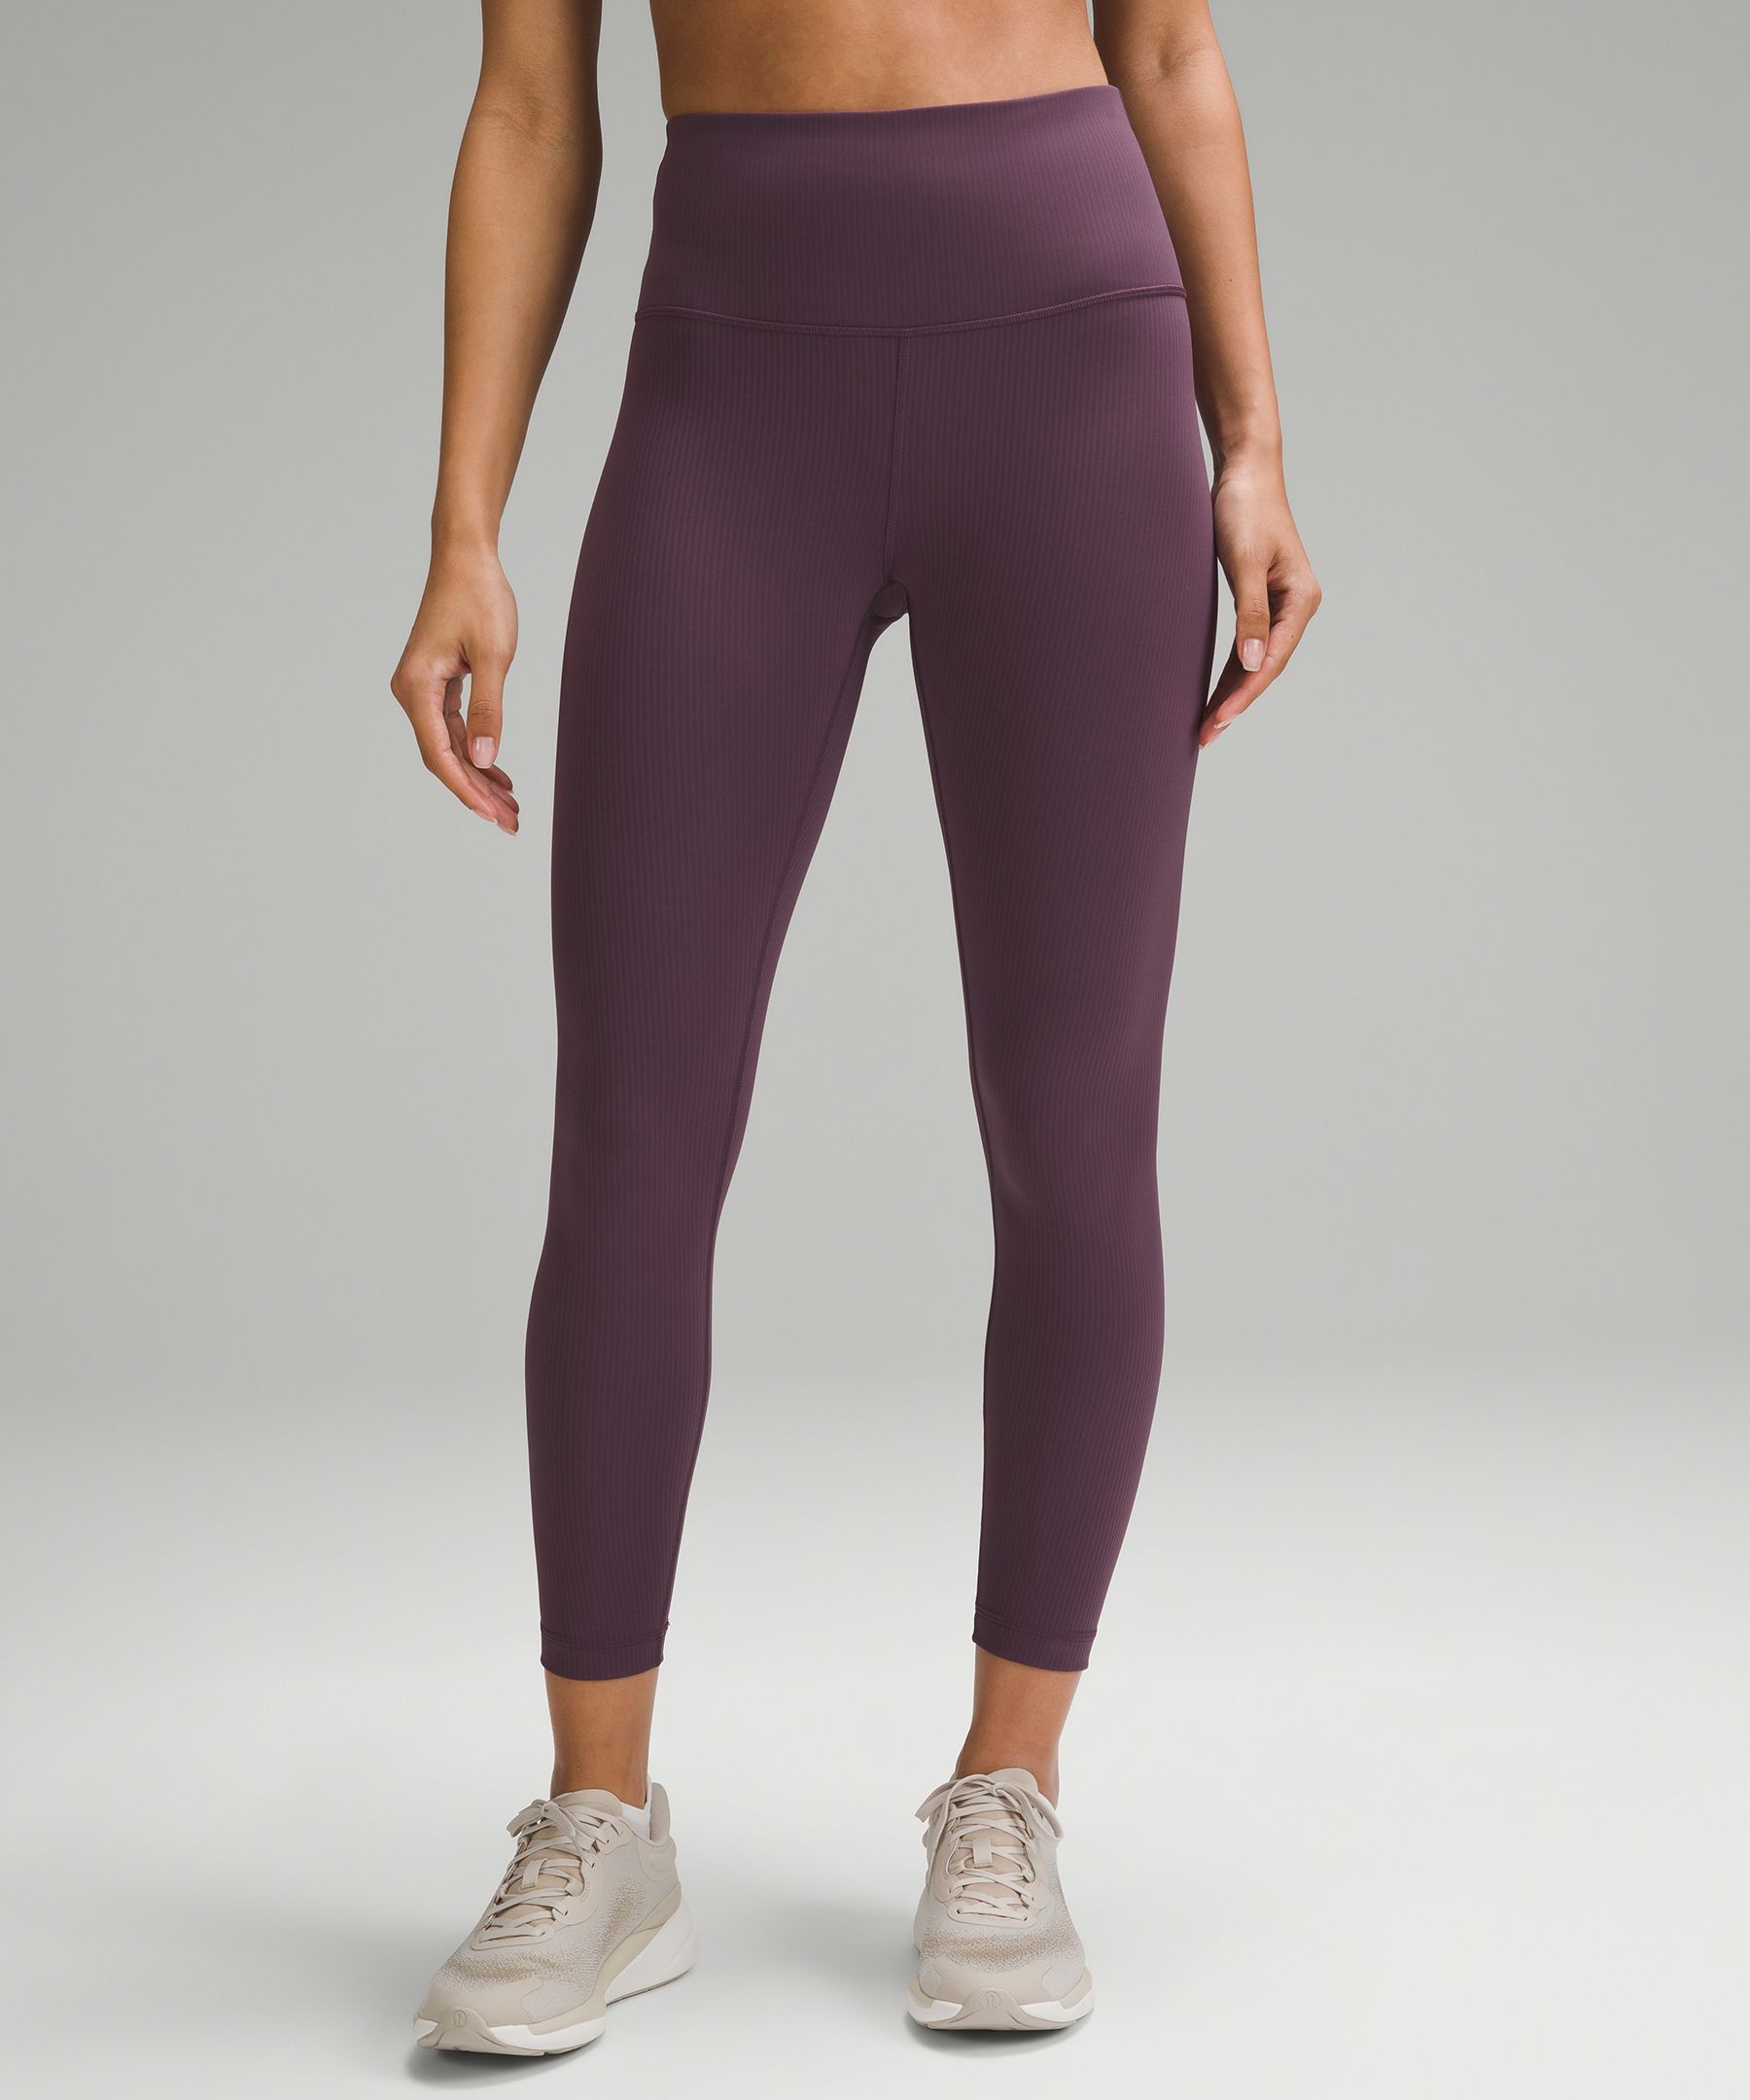 New Lu 06 Yoga Pants Sports Leggings Women Stretch Quick Dry Black